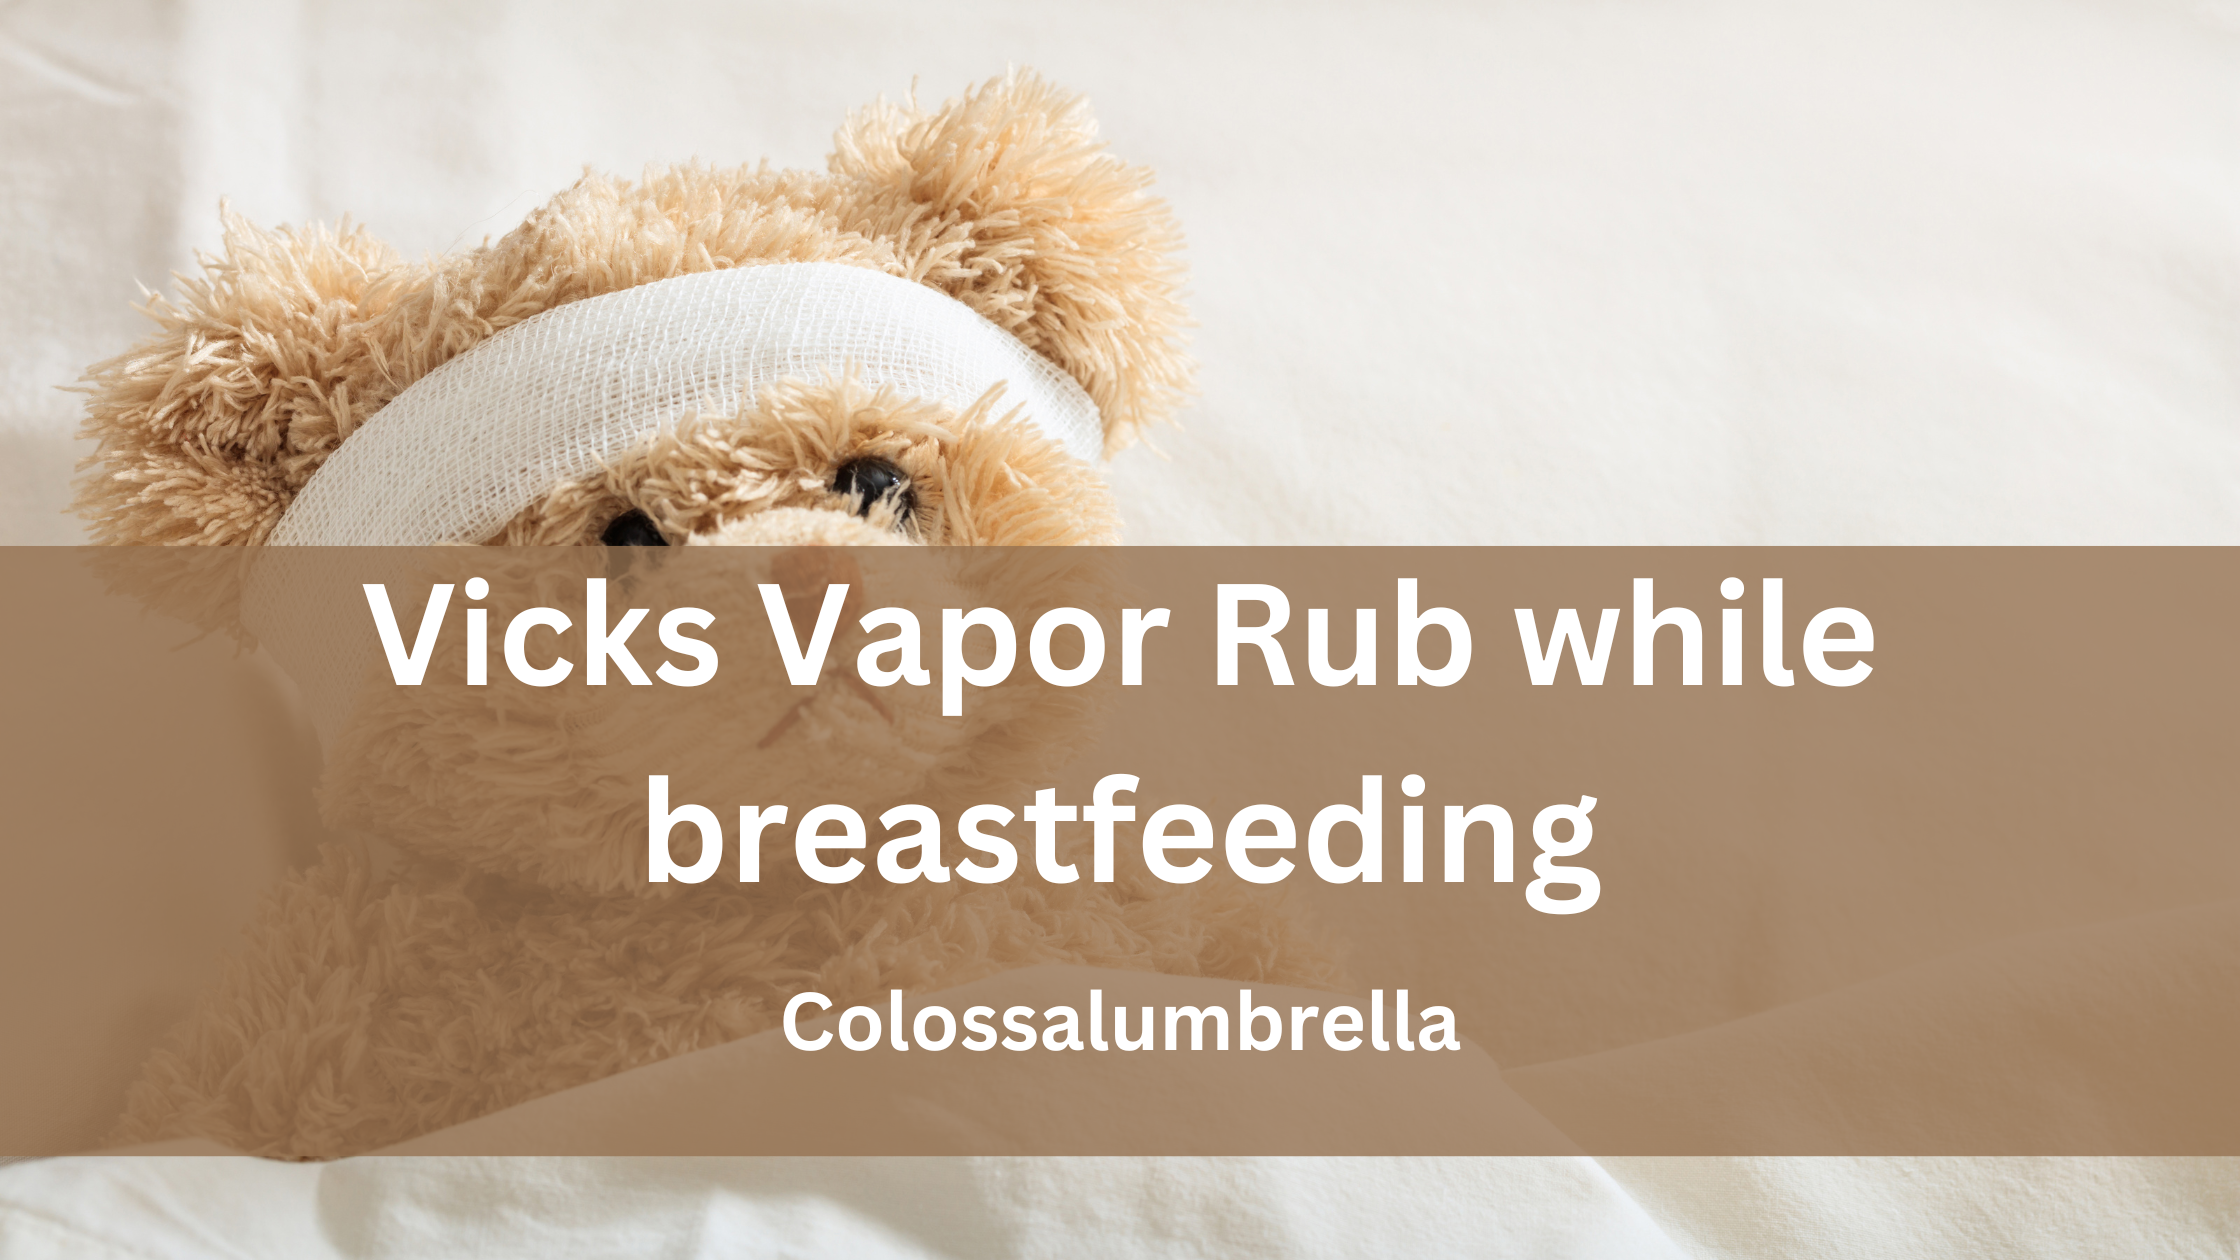 Can I use Vicks while breastfeeding